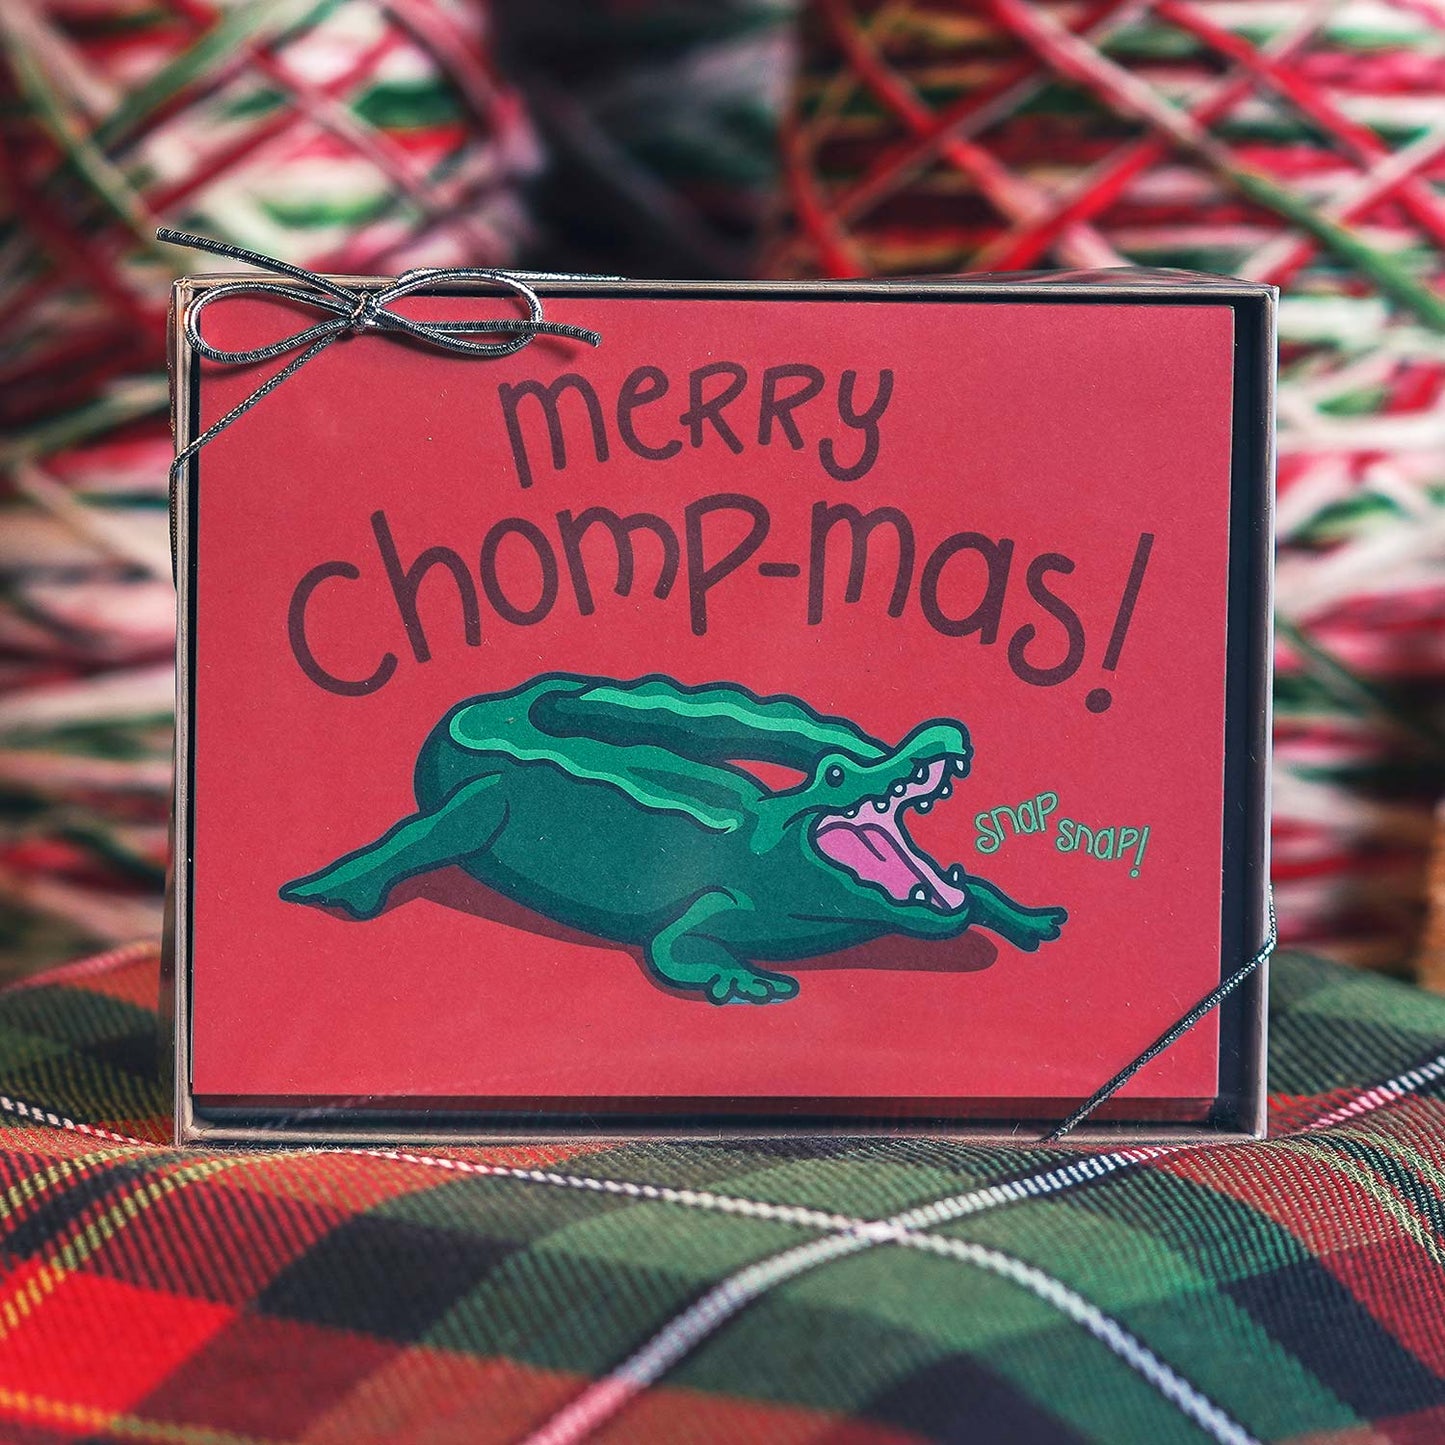 Merry Chomp-mas Holiday Cards | 2023 Christmas Cards